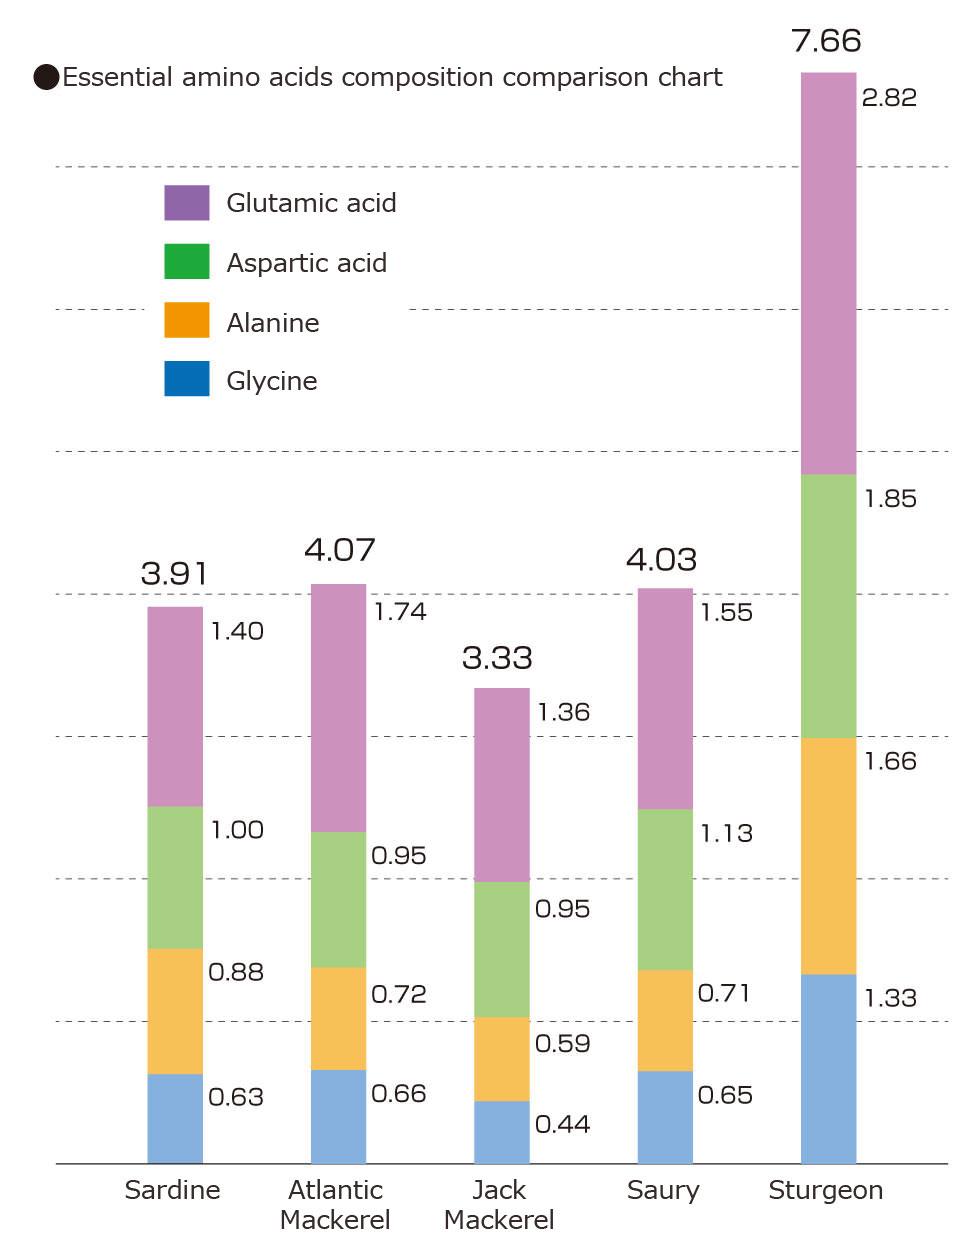 Essential amino acids composition comparison chart